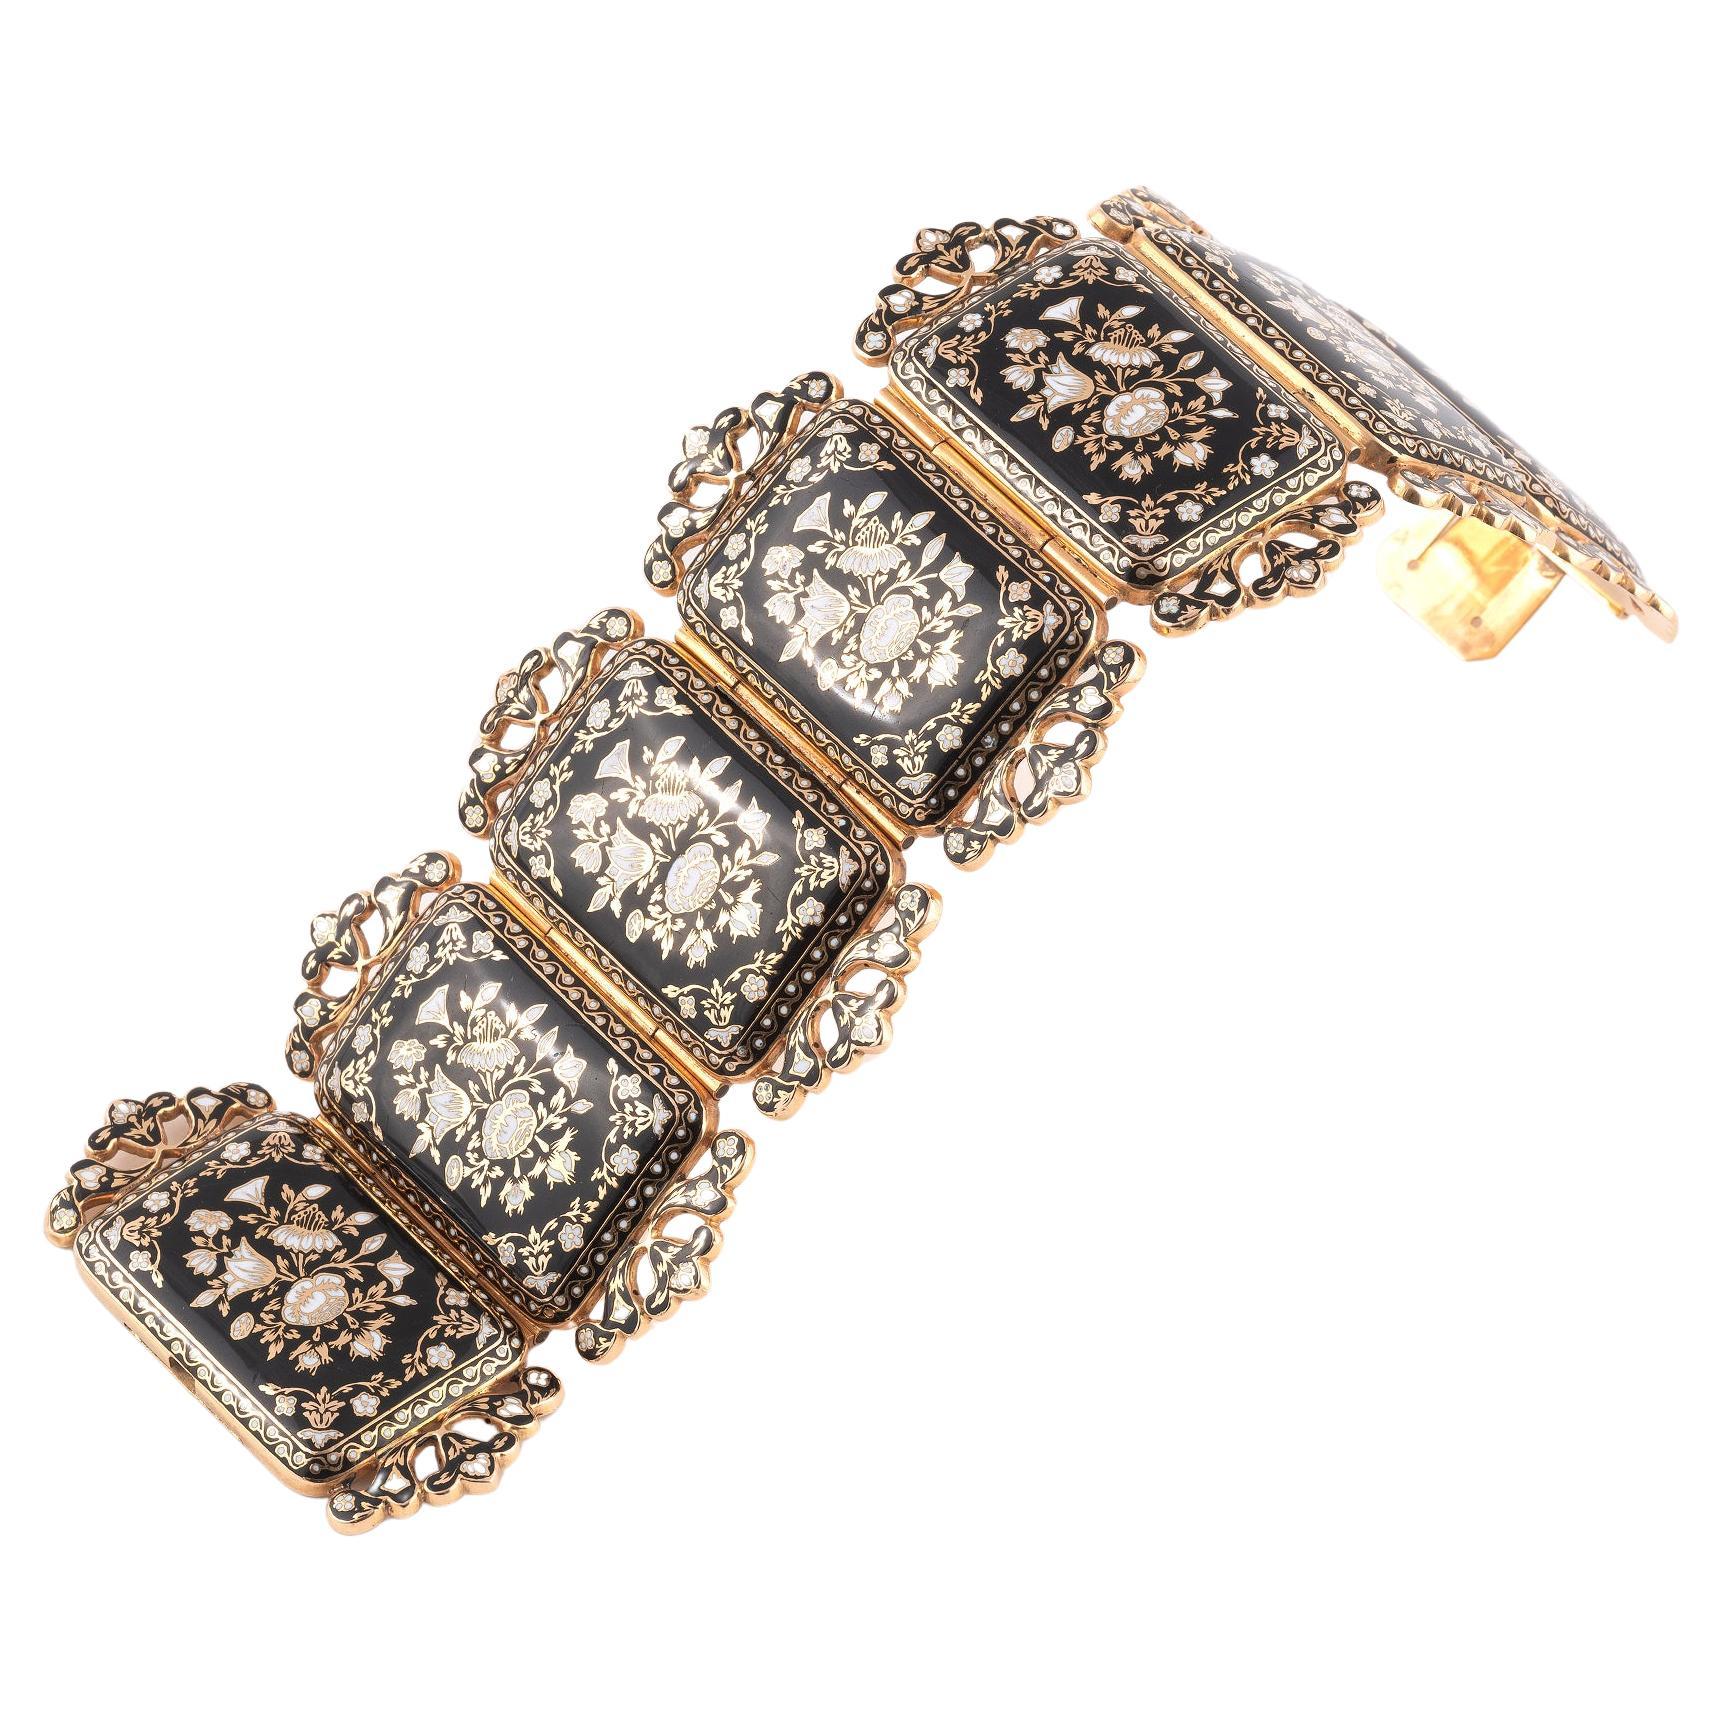 Antique Swiss Gold And Enamel Bracelet Circa 1840